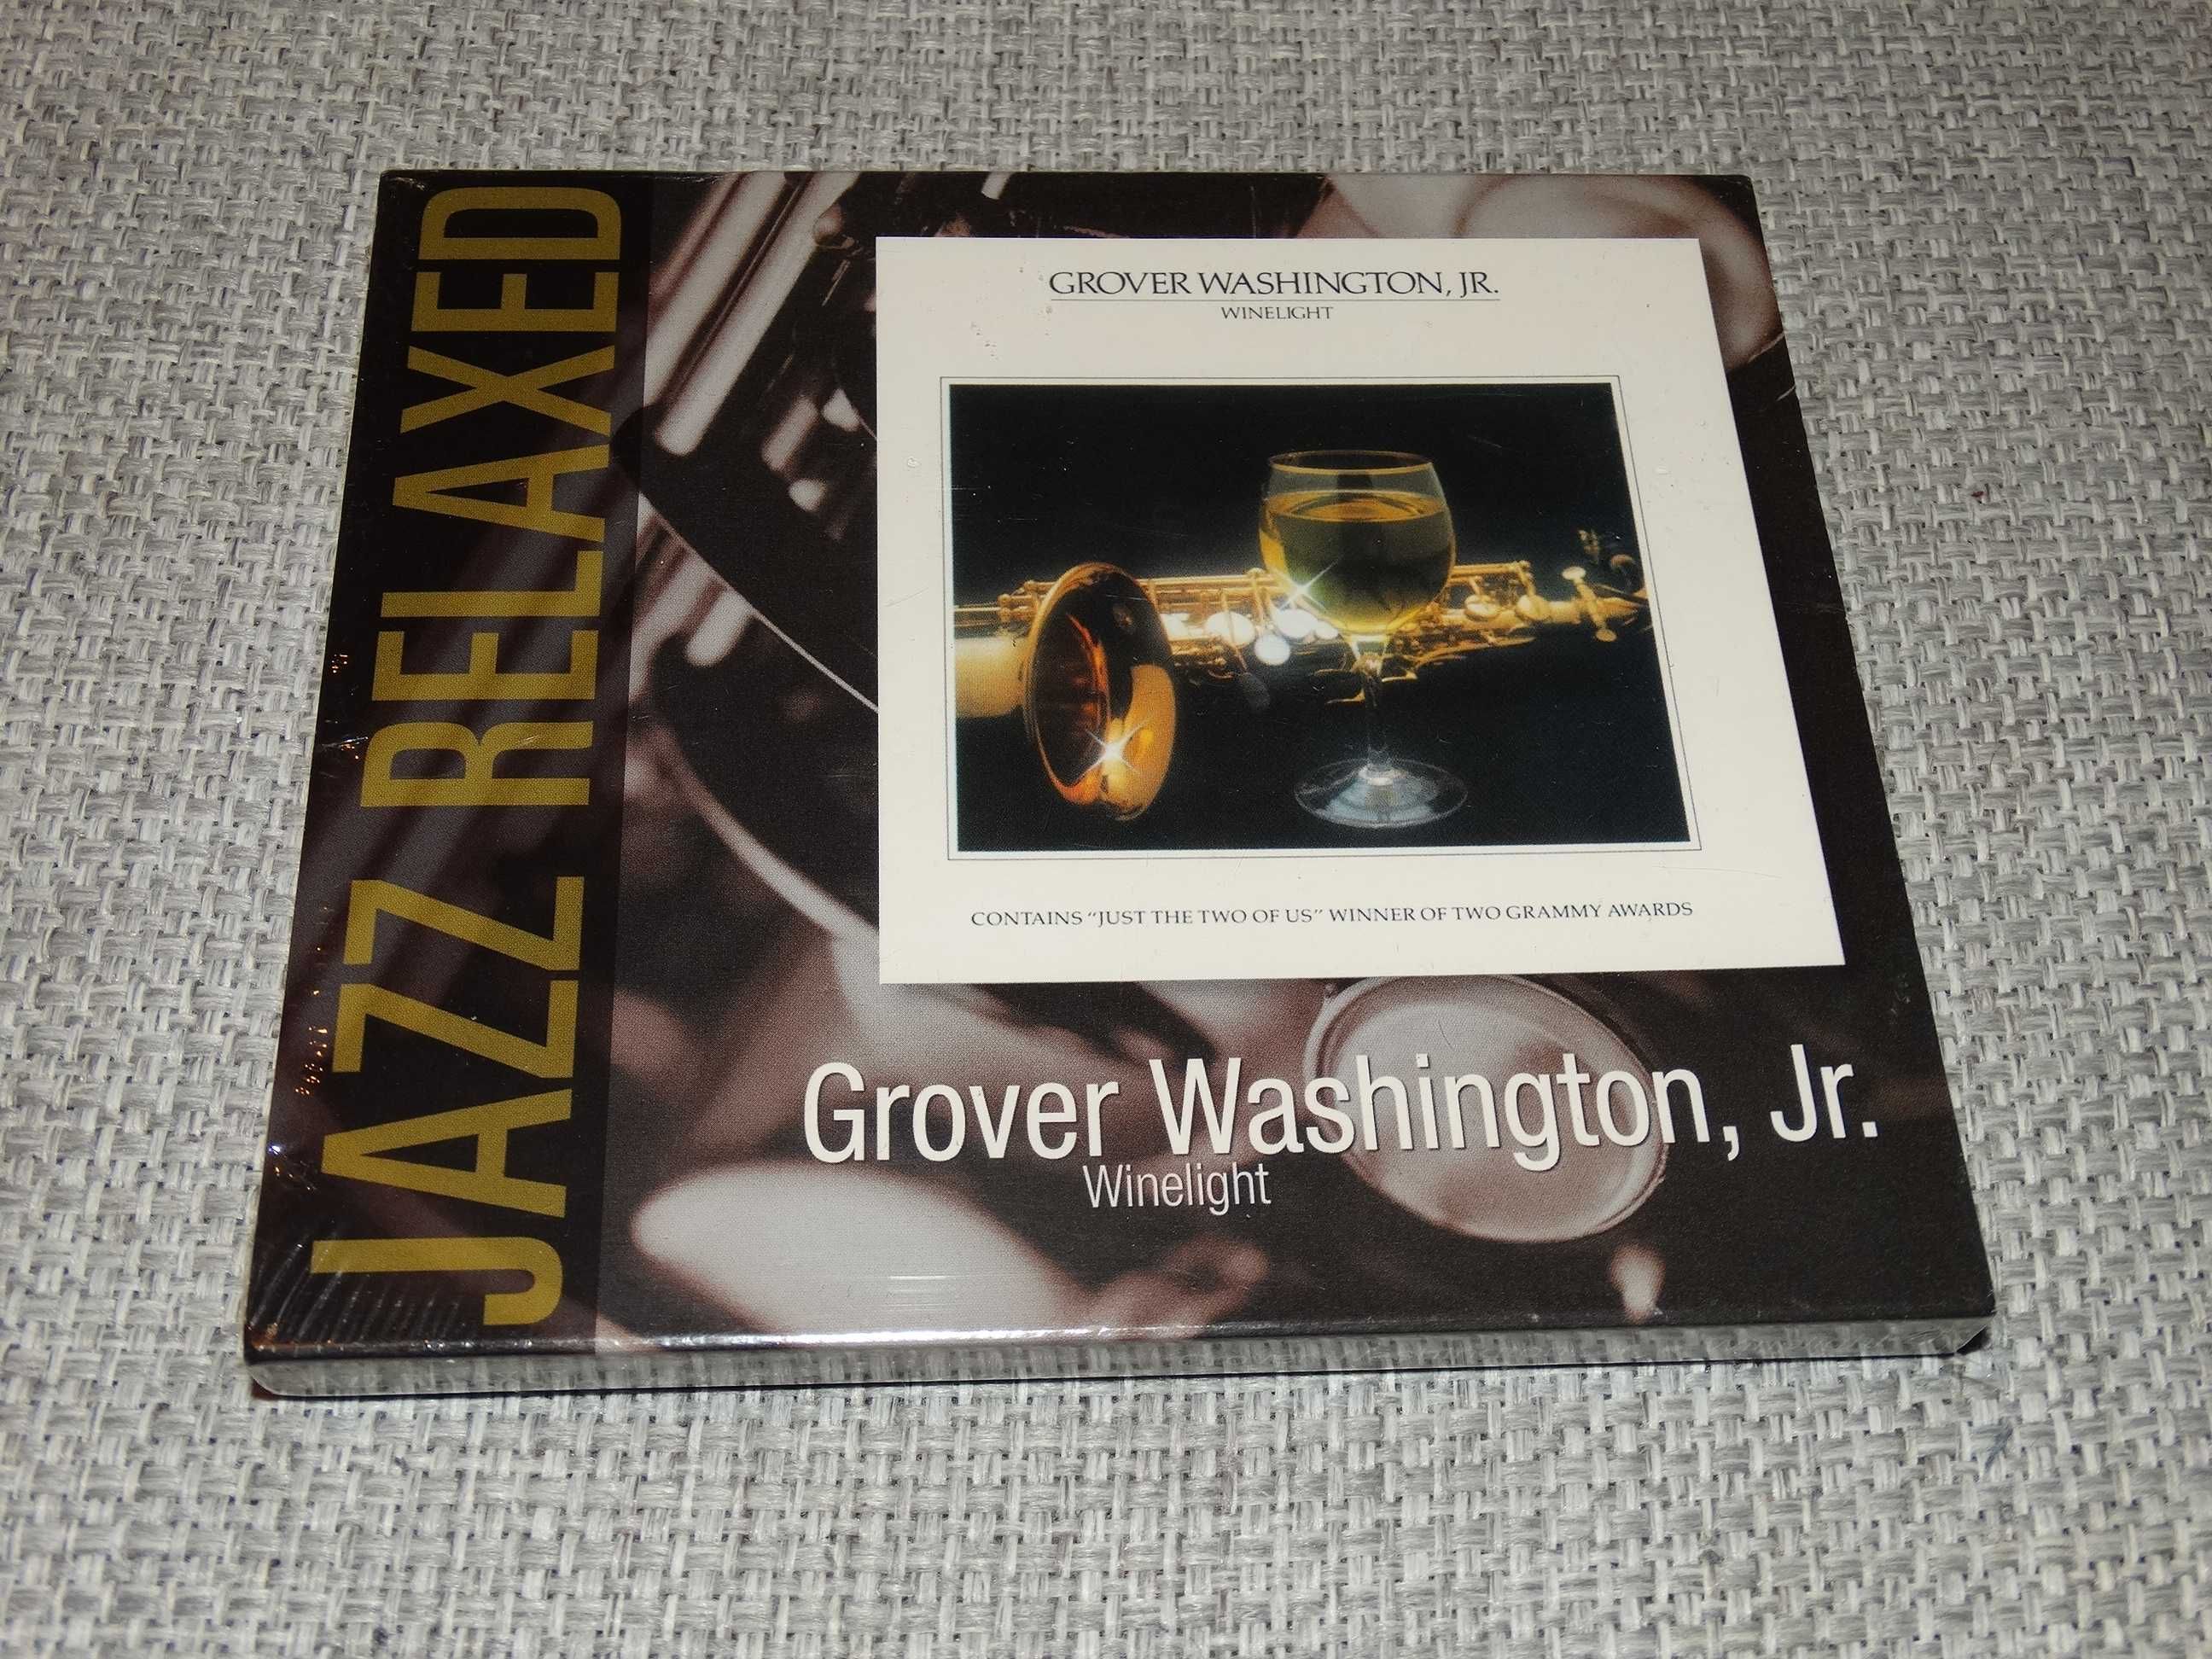 Grover Washington, Jr. Winelight CD